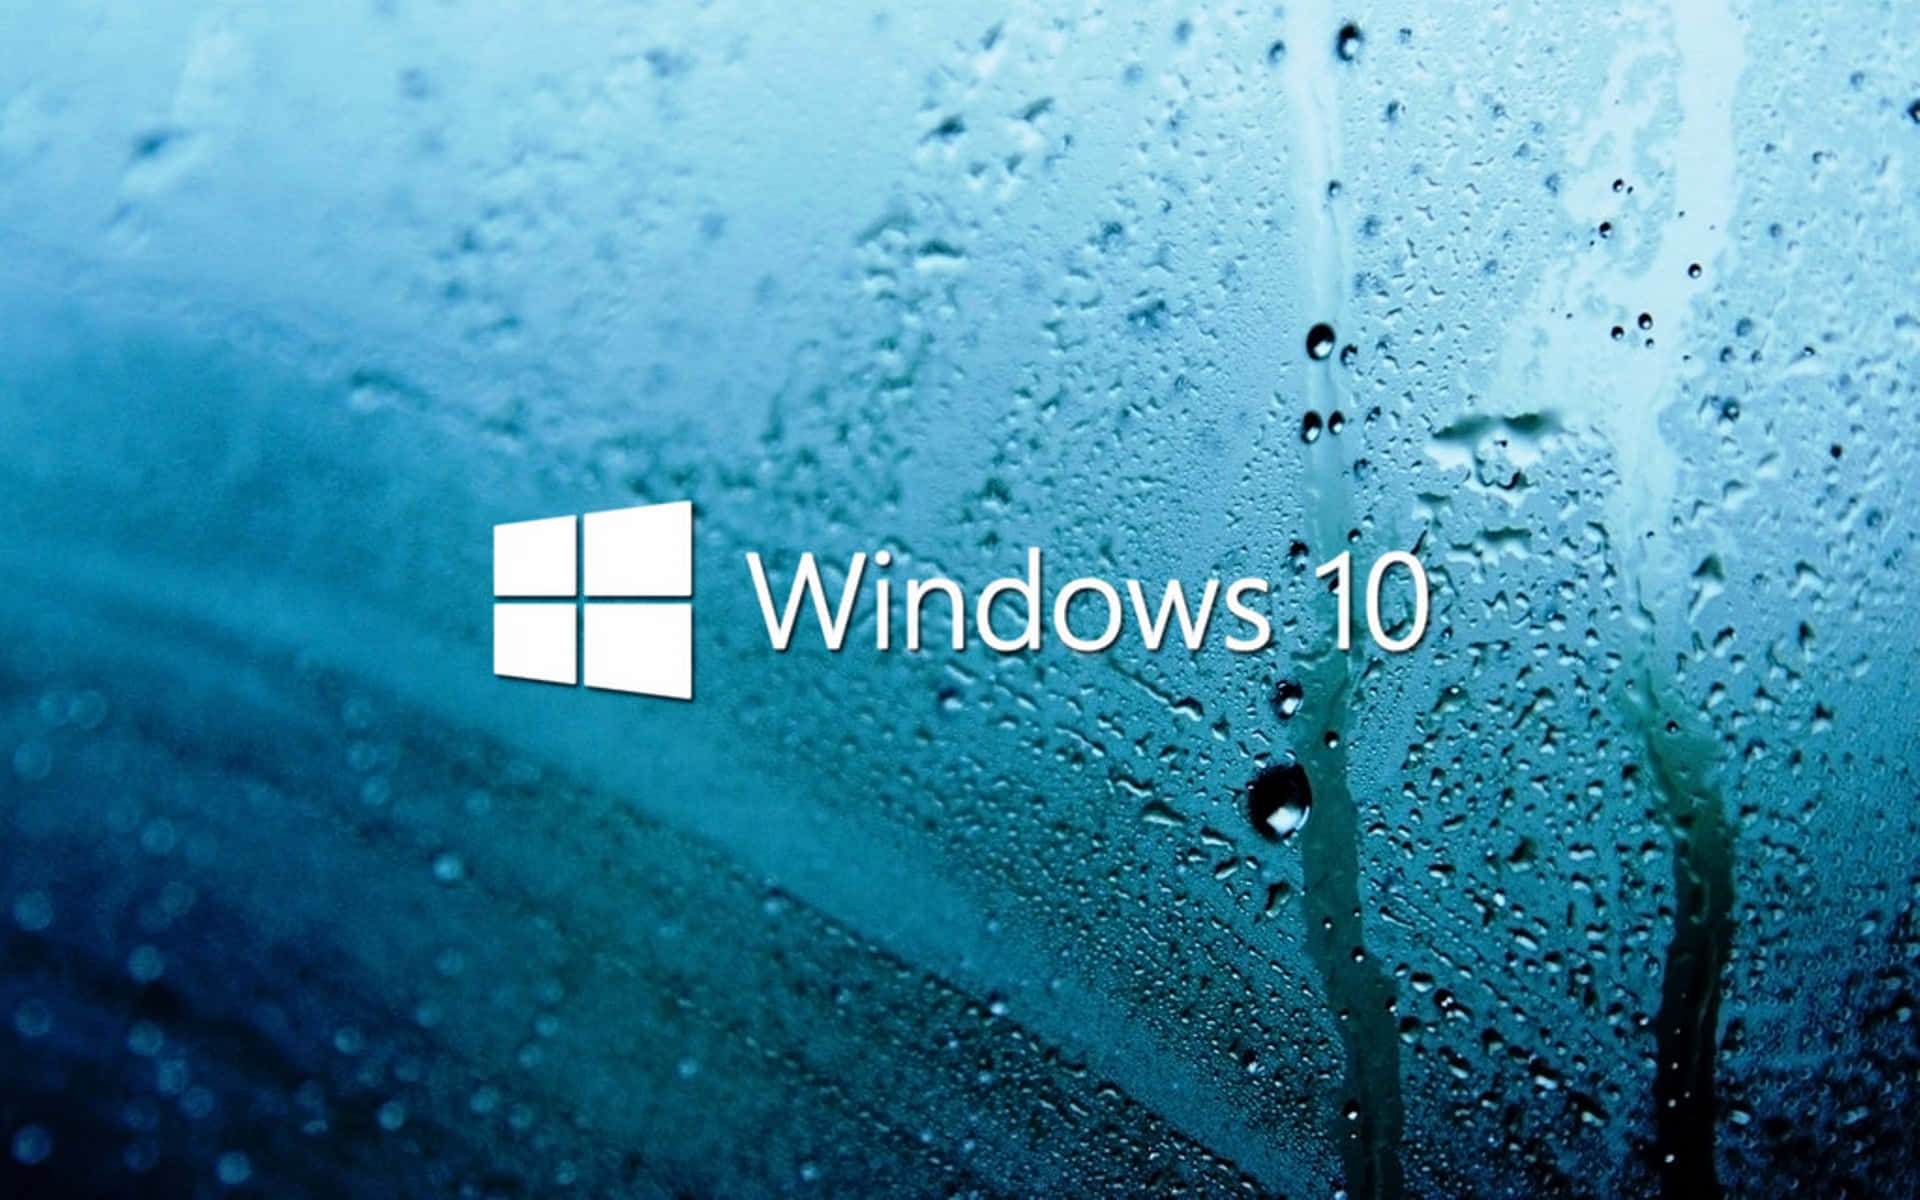 100+] Windows 10 Hd Wallpapers